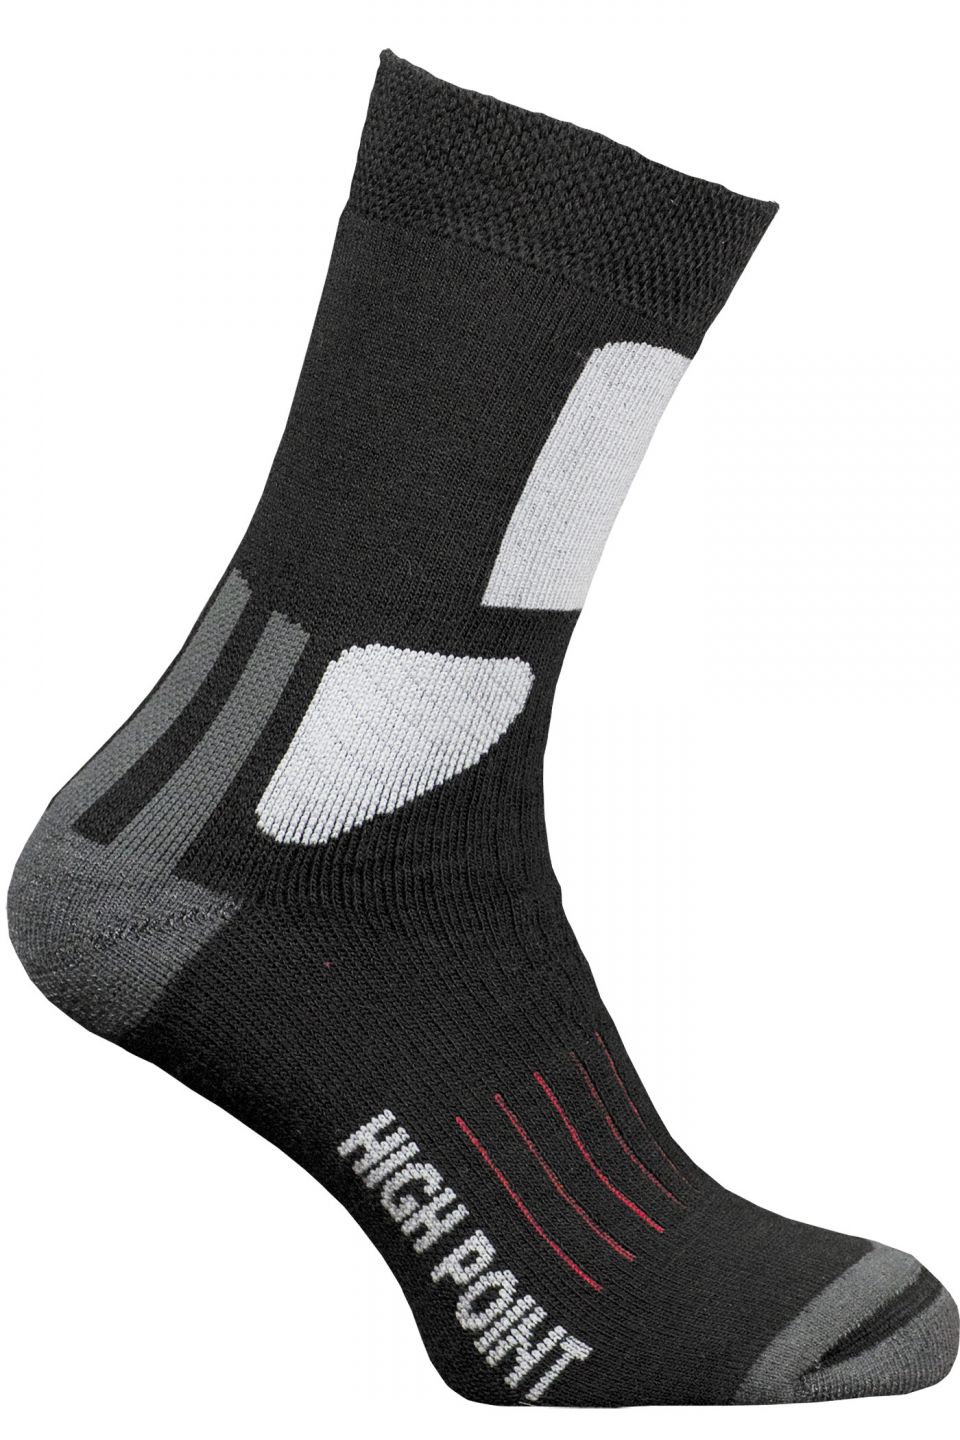 High Point ponožky MOUNTAIN 2.0 MERINO Velikost: 35-38